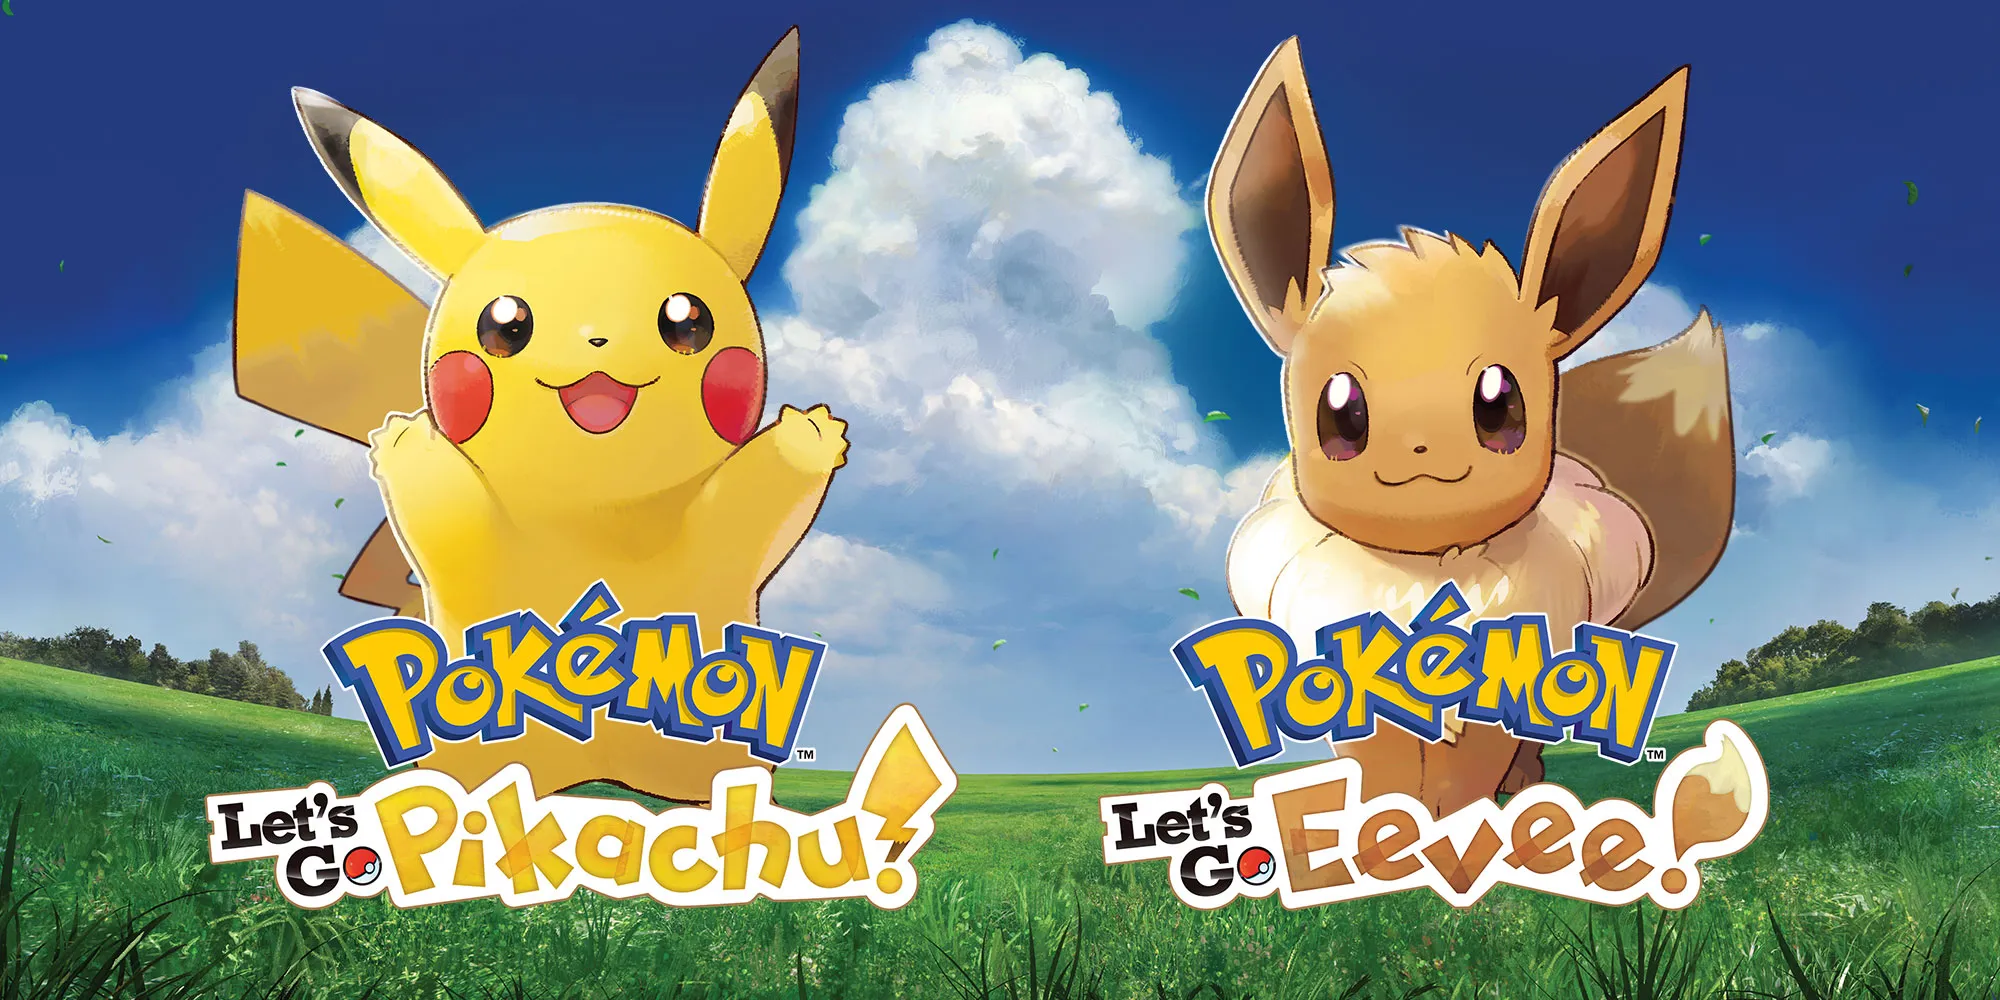 Pokemon Let's Go Pikachu & Let's Go Eevee